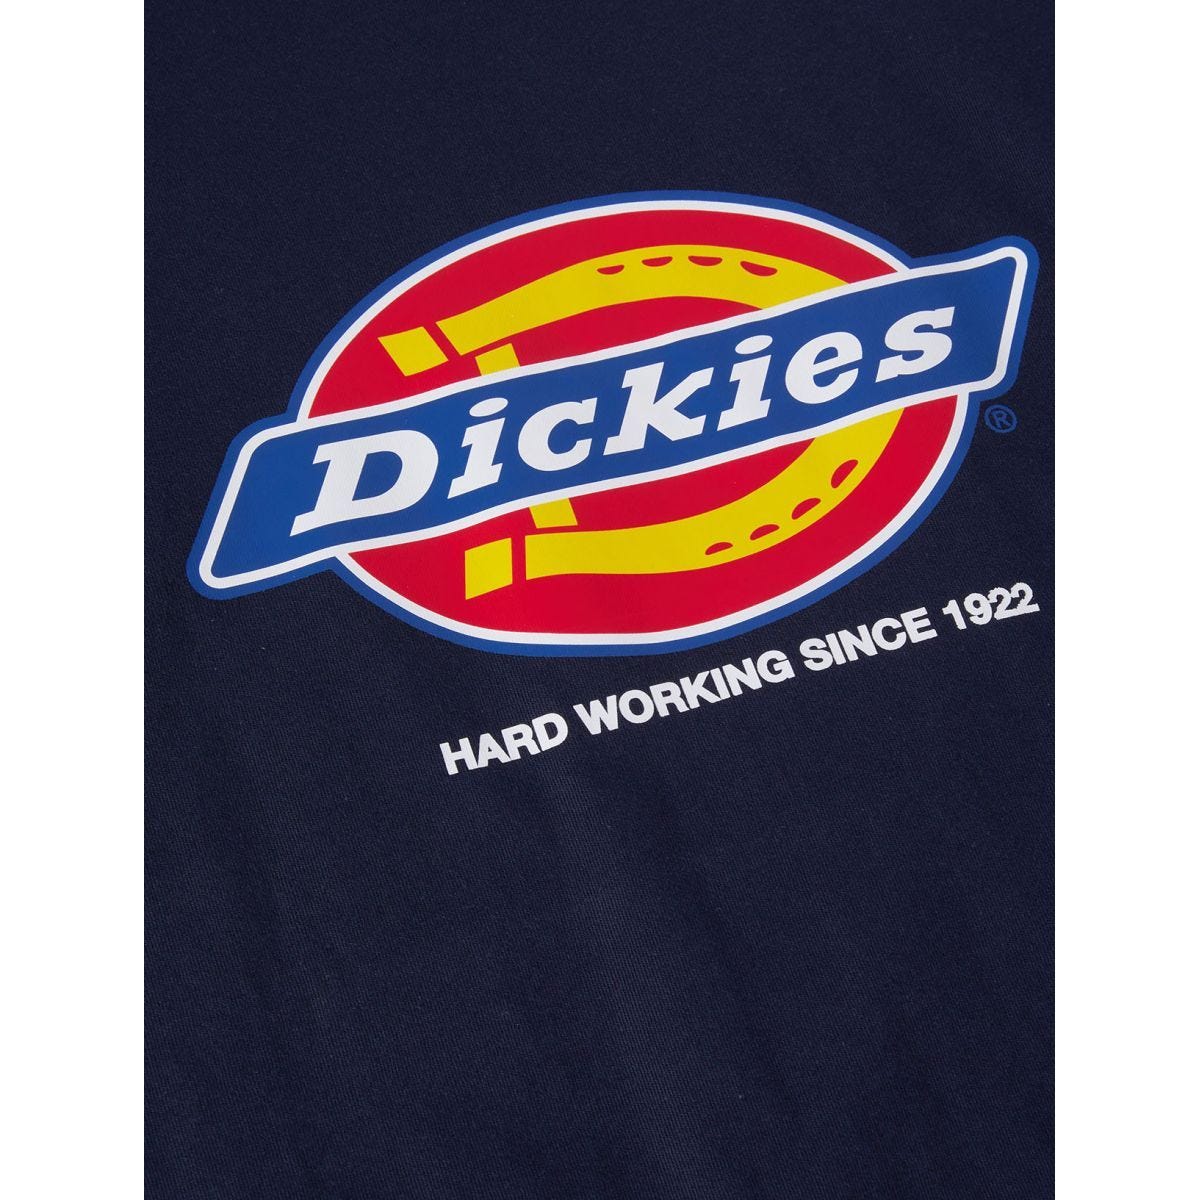 T-shirt de travail Denison bleu marine - Dickies - Taille S 4